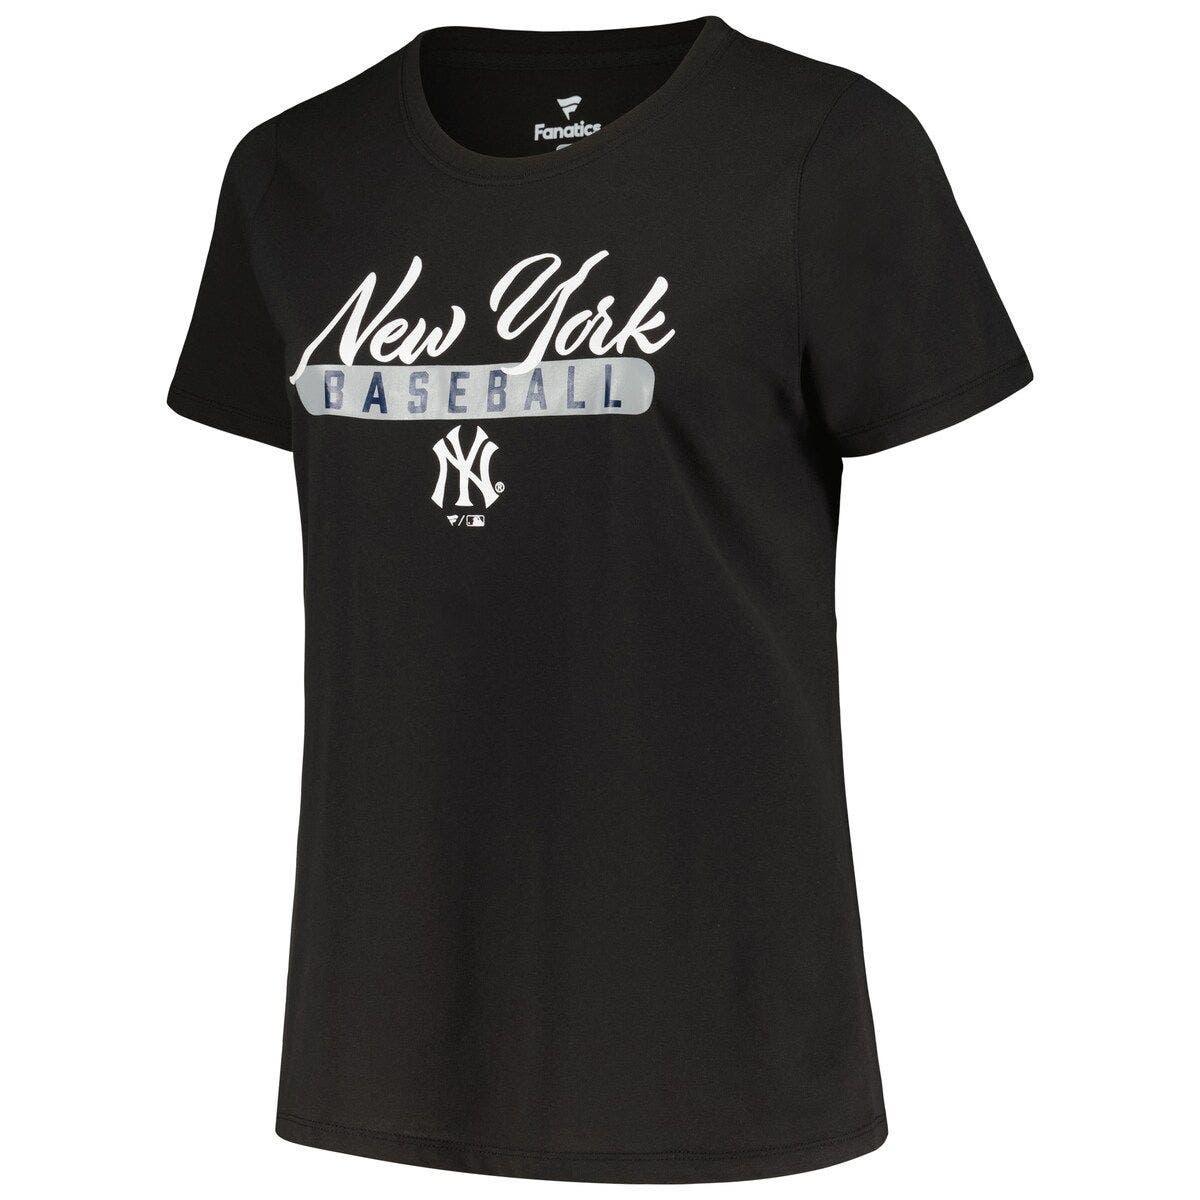 Derek Jeter New York Yankees Women's Plus Size Replica Player Jersey - White